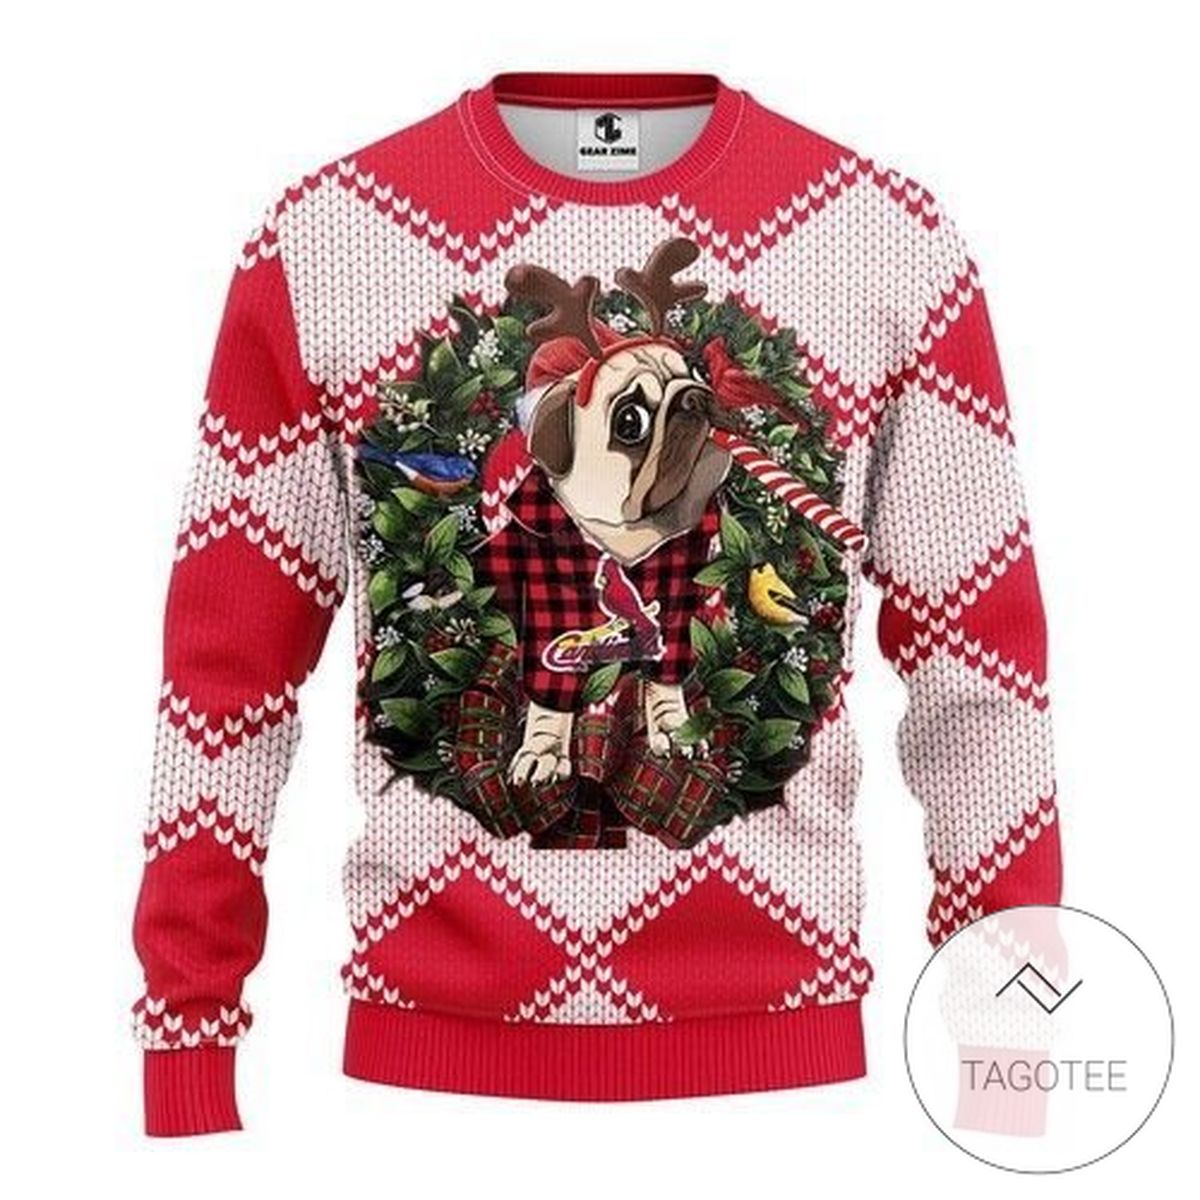 Mlb St. Louis Cardinals Pug Dog Sweatshirt Knitted Ugly Christmas Sweater